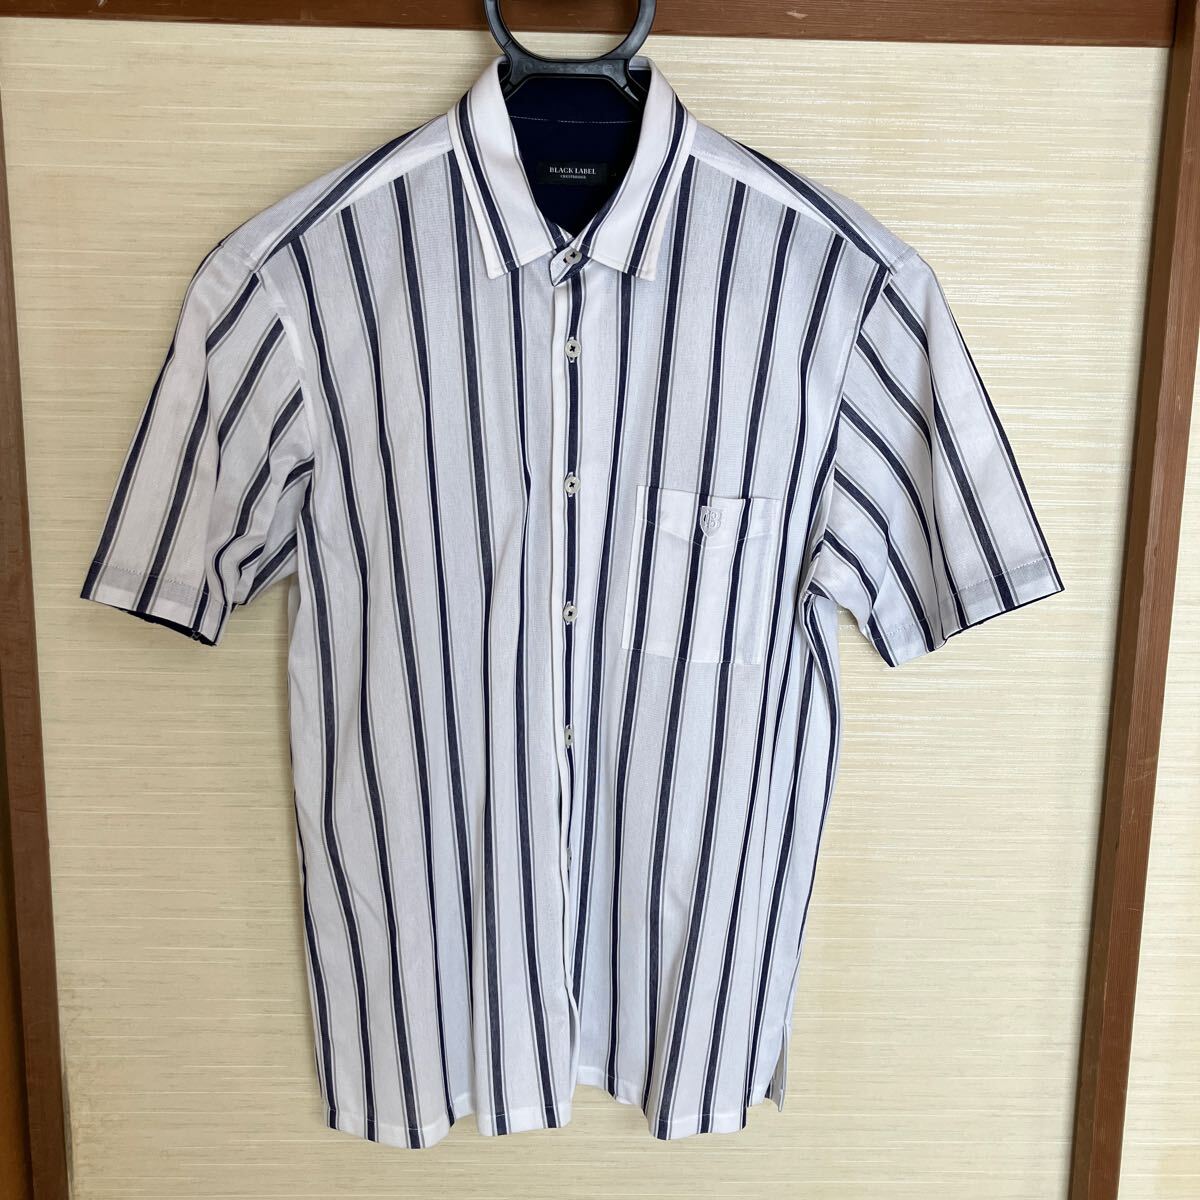  прекрасный товар Black Label k rest Bridge рубашка с коротким рукавом полоса размер L